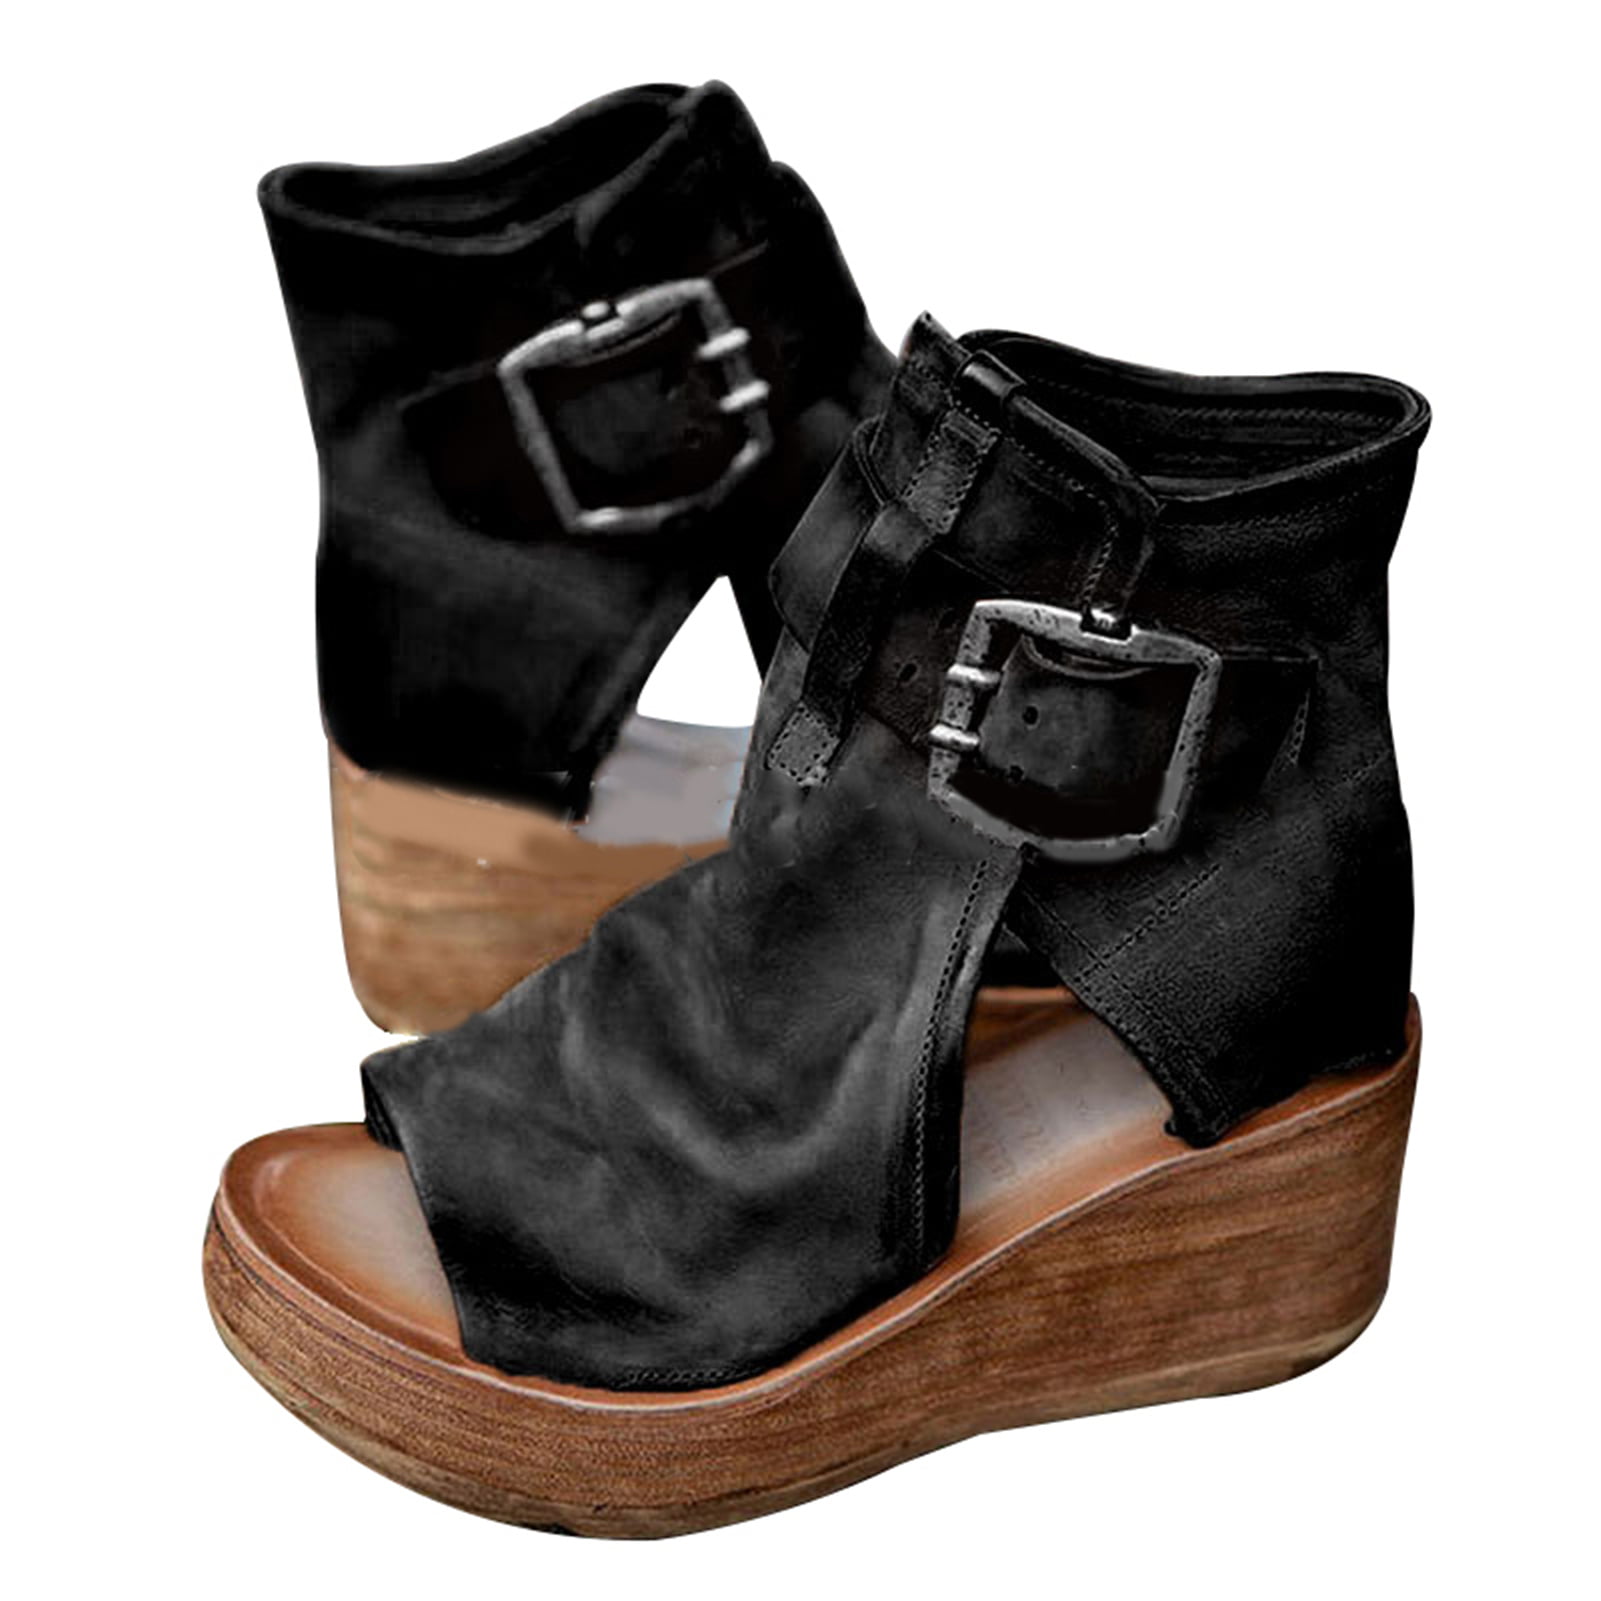 Details about   Predictions Women's Leather Sandals Size 6.5 Ladies Black Casual Dress Open Toe